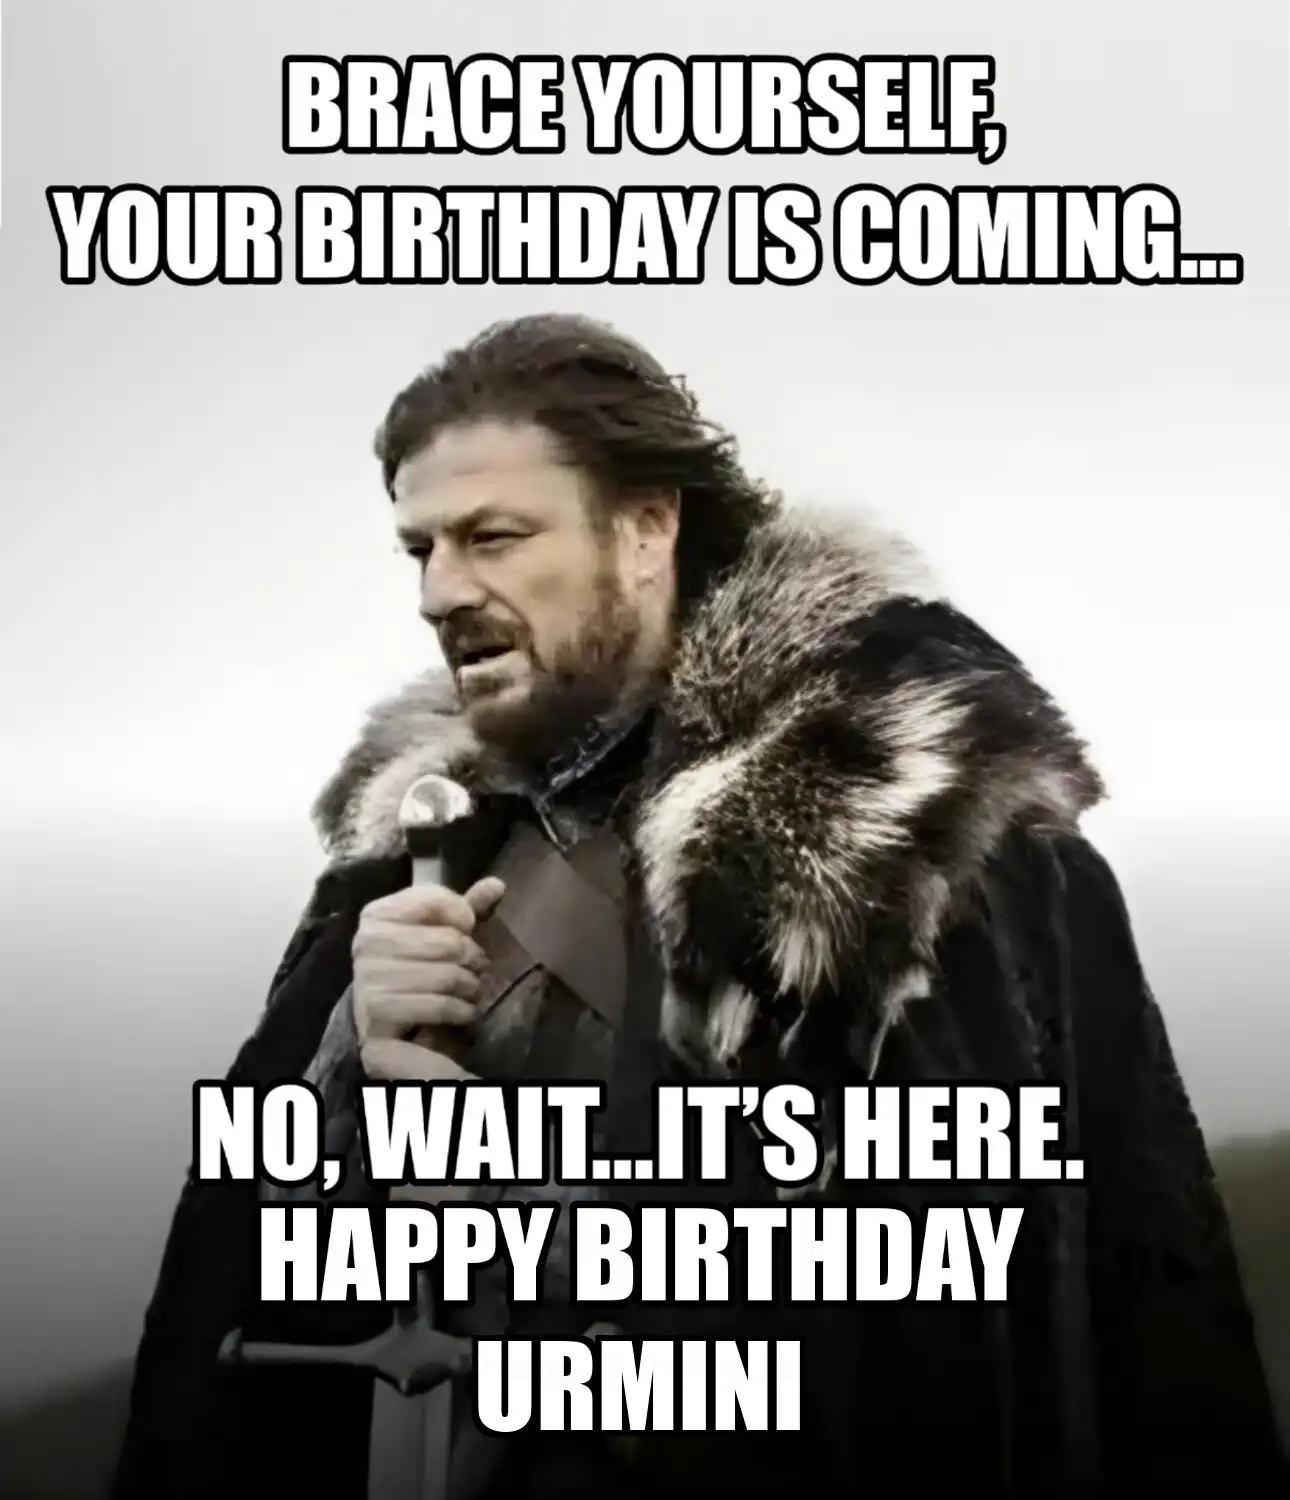 Happy Birthday Urmini Brace Yourself Your Birthday Is Coming Meme